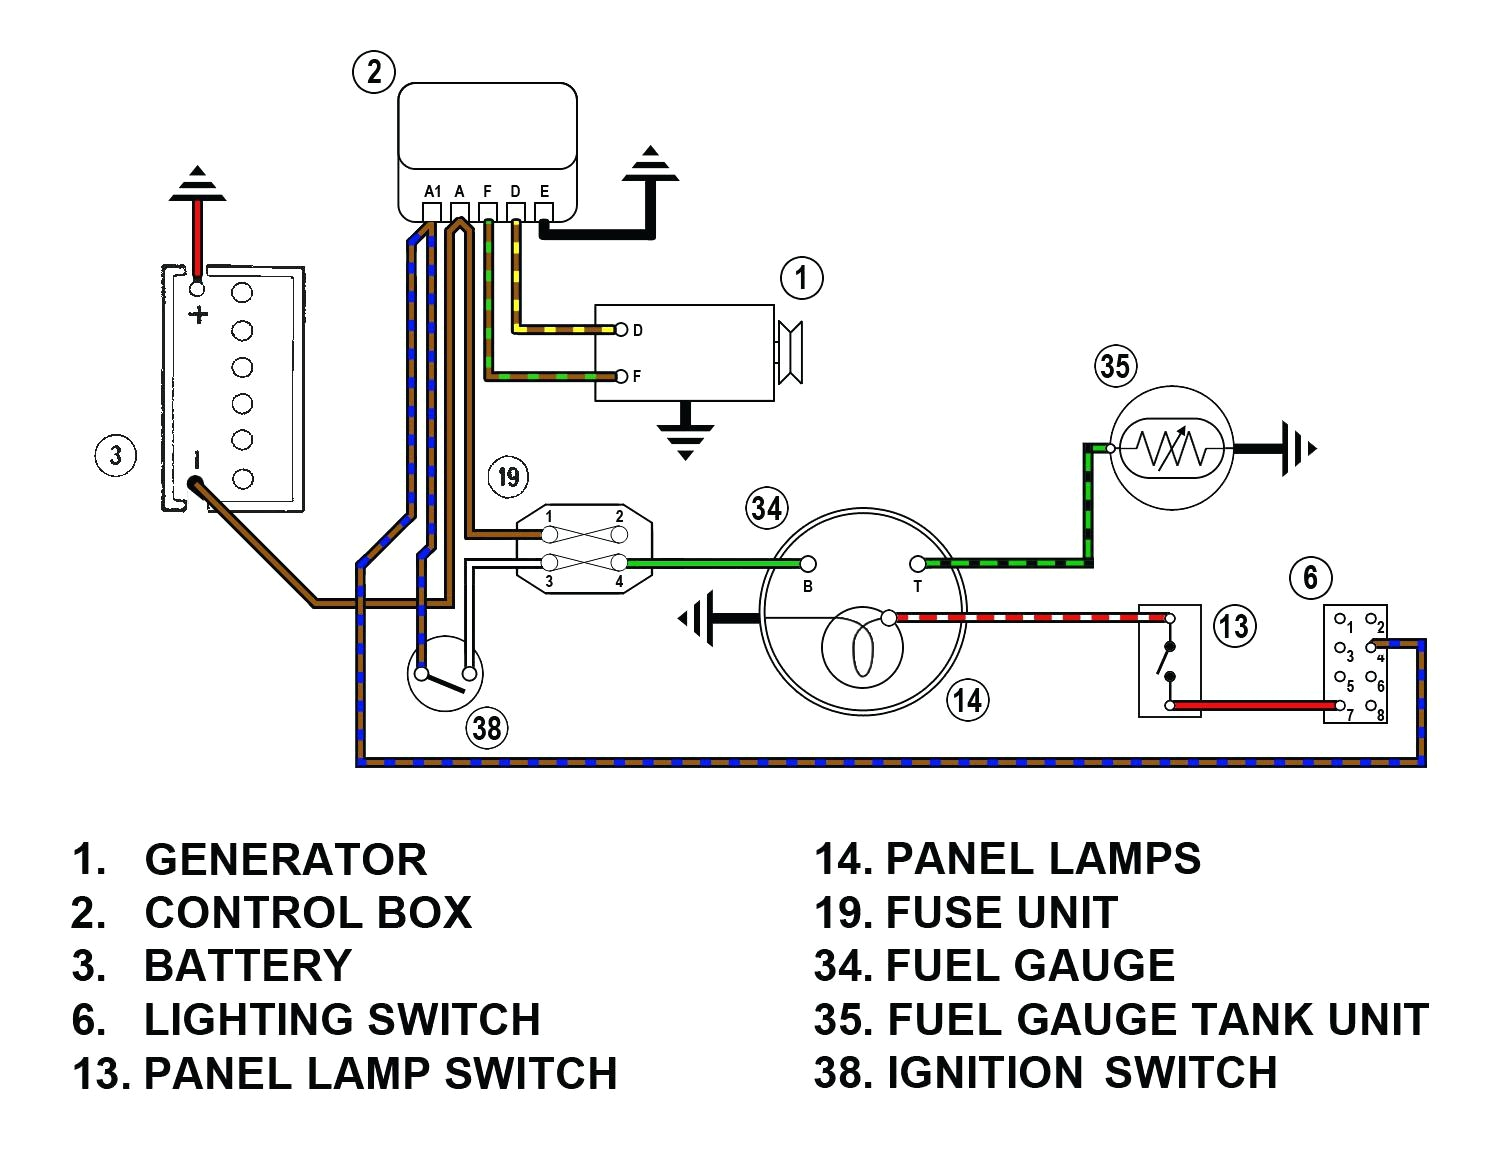 emg 89 wiring diagram wiring diagram technic emg sa sa 89 wiring diagram emg 89 81